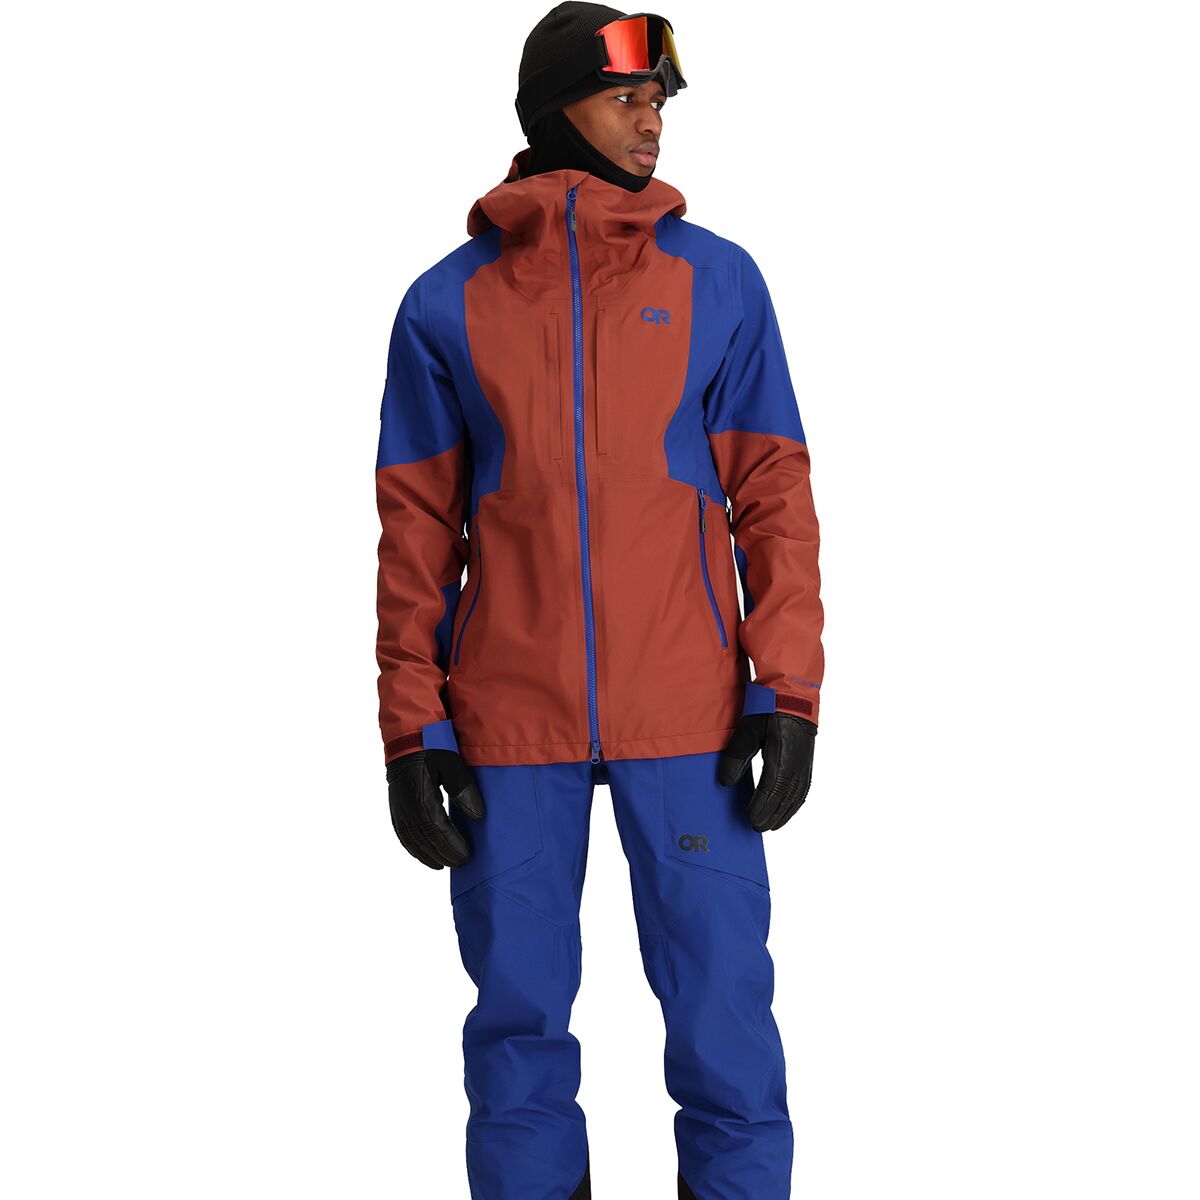 North Face Jacket Mens Large Red Goretex Pro Shell Ski Patrol Mountain  Parka A12